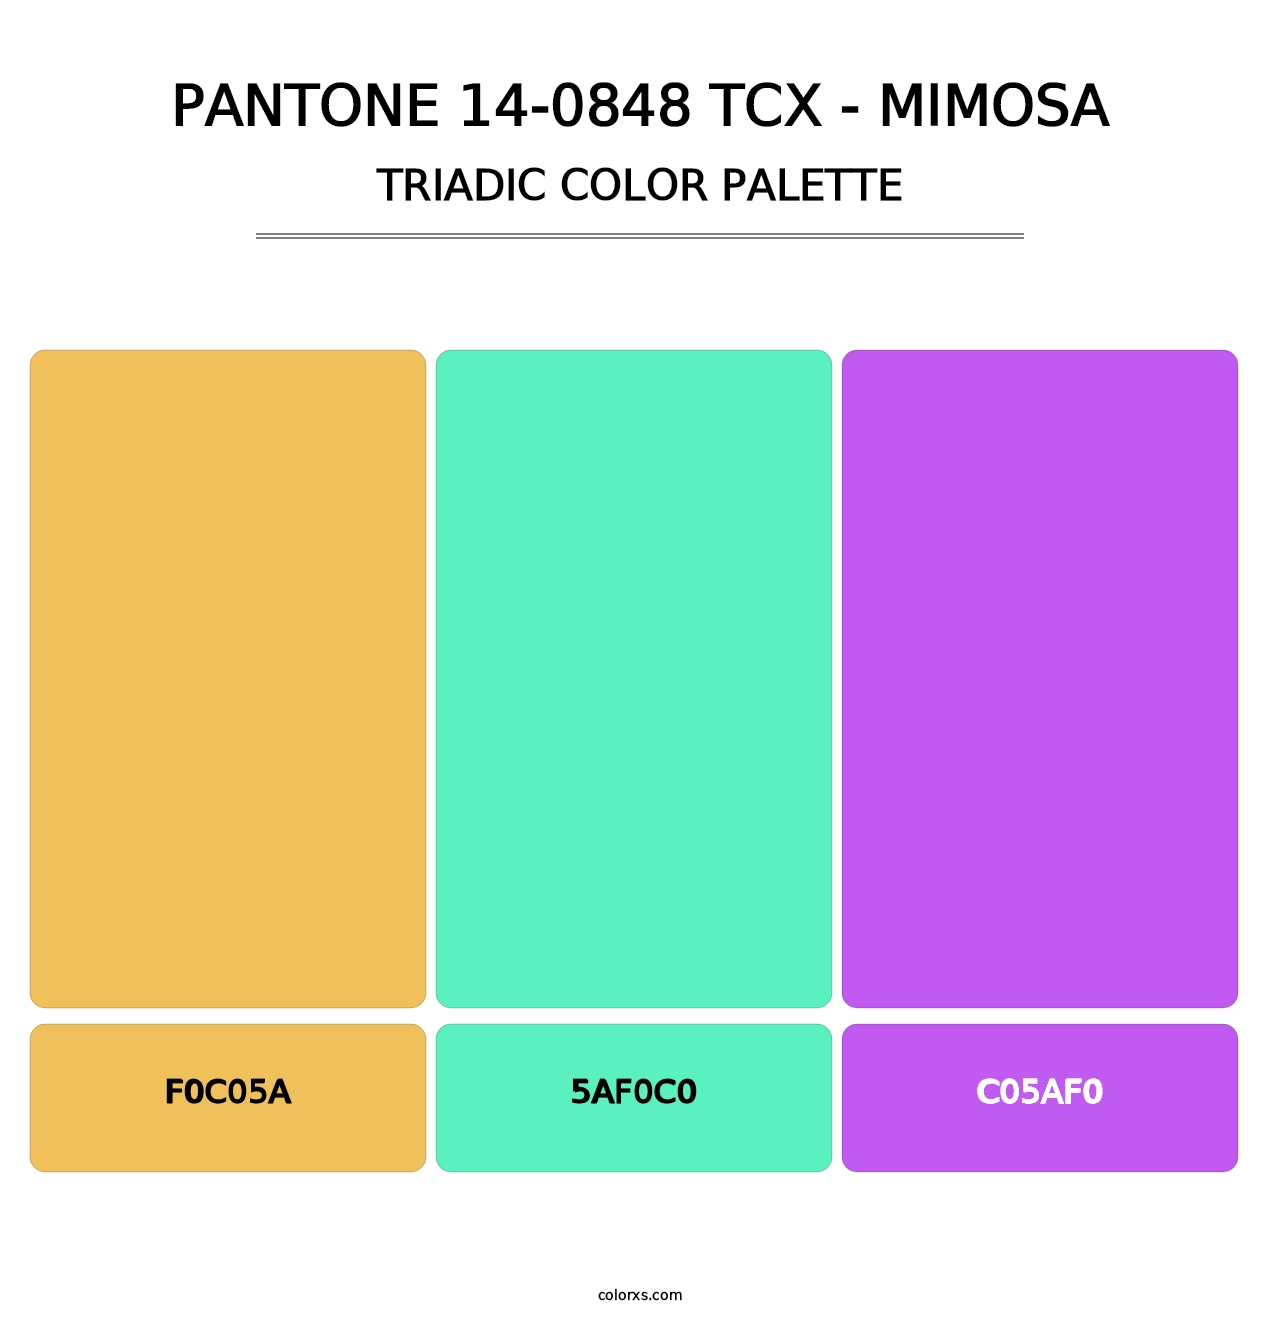 PANTONE 14-0848 TCX - Mimosa - Triadic Color Palette